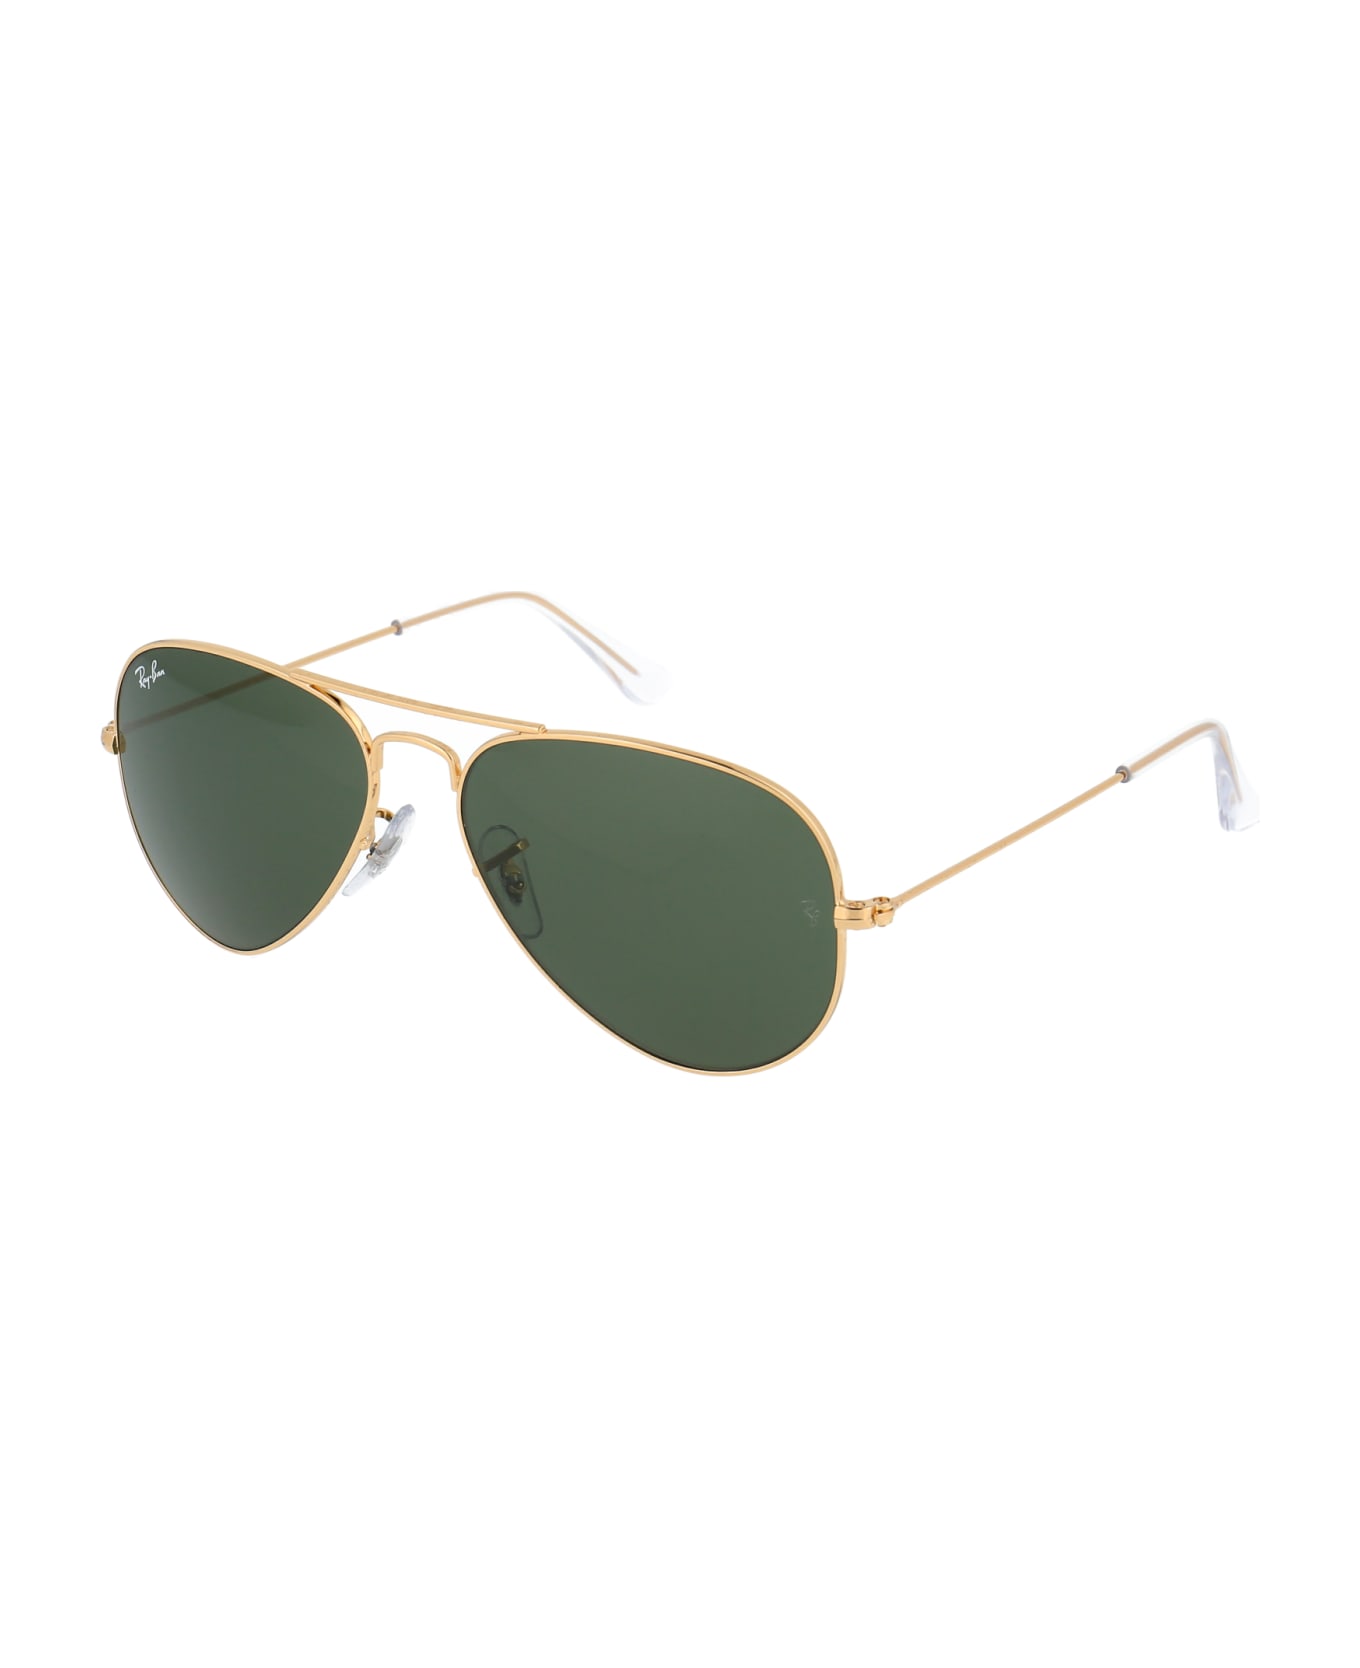 Ray-Ban Aviator Sunglasses - W3234 GOLD